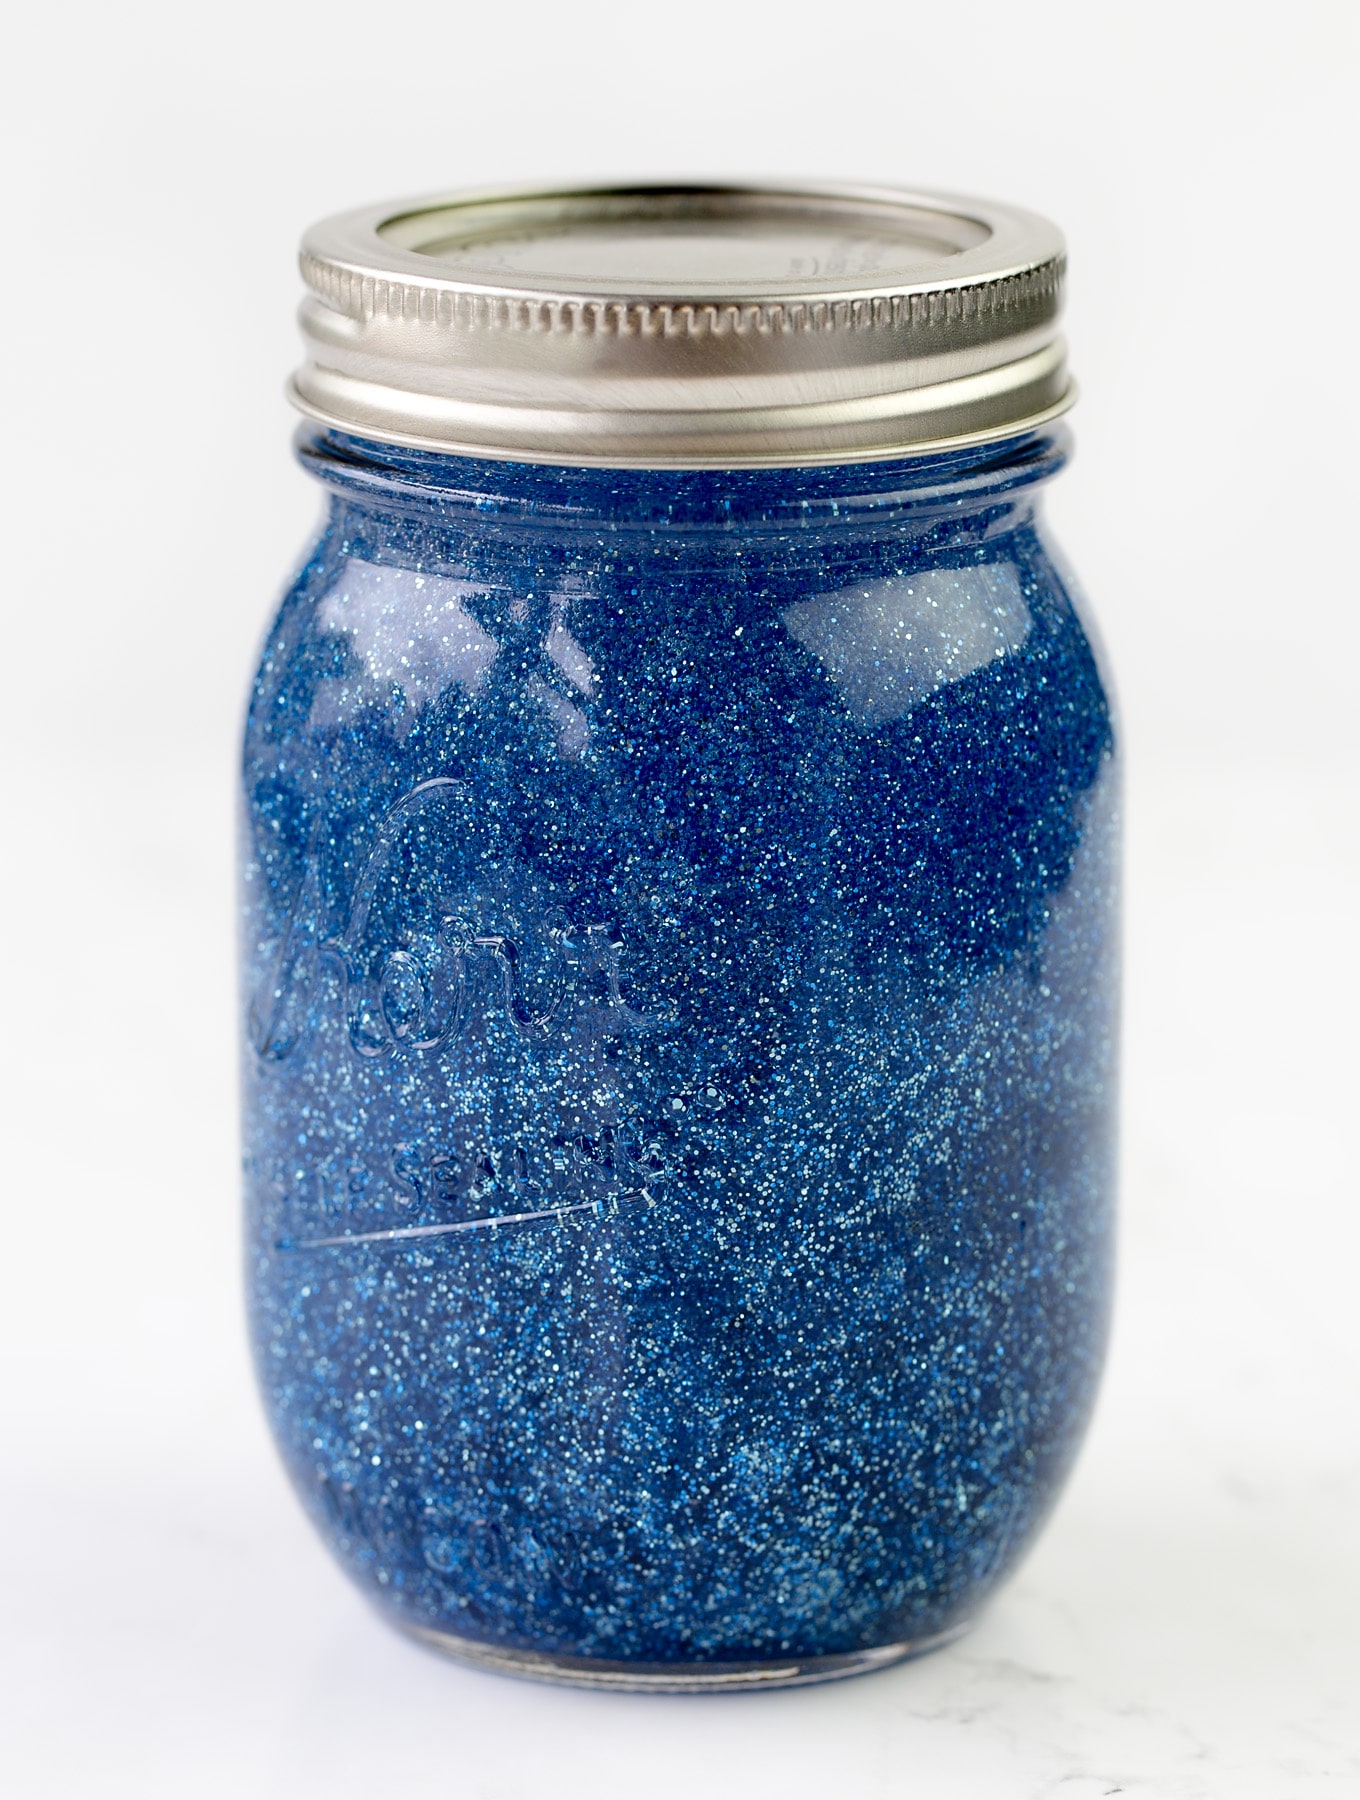 How a Glitter Jar Can Help Kids Control Their Feelings